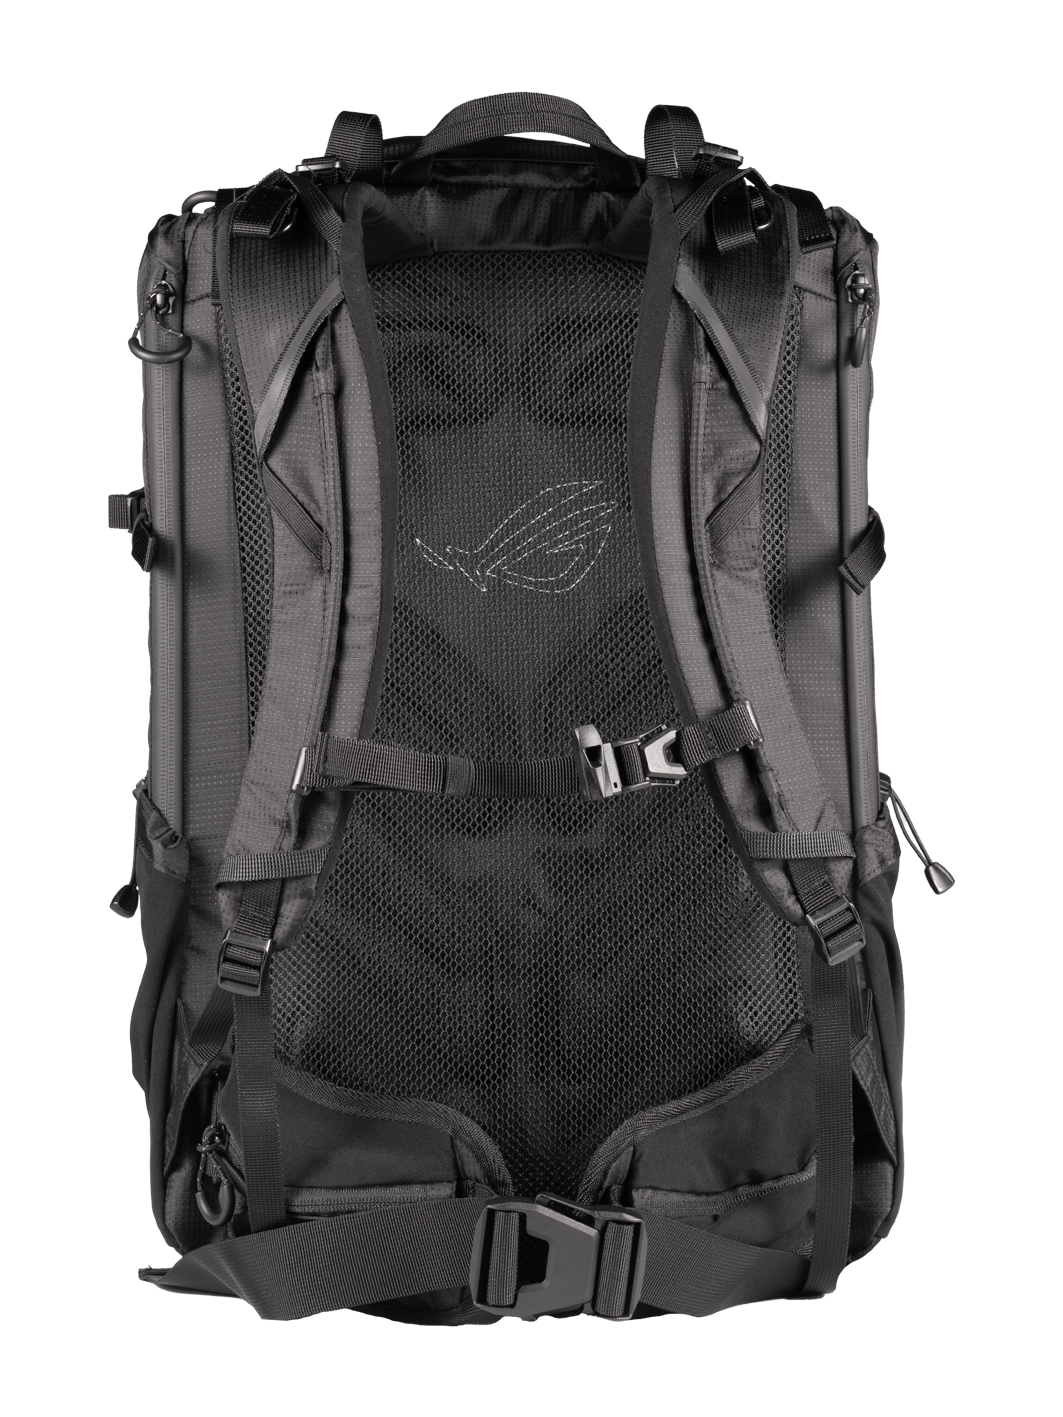 ROG Archer ErgoAir Gaming Backpack